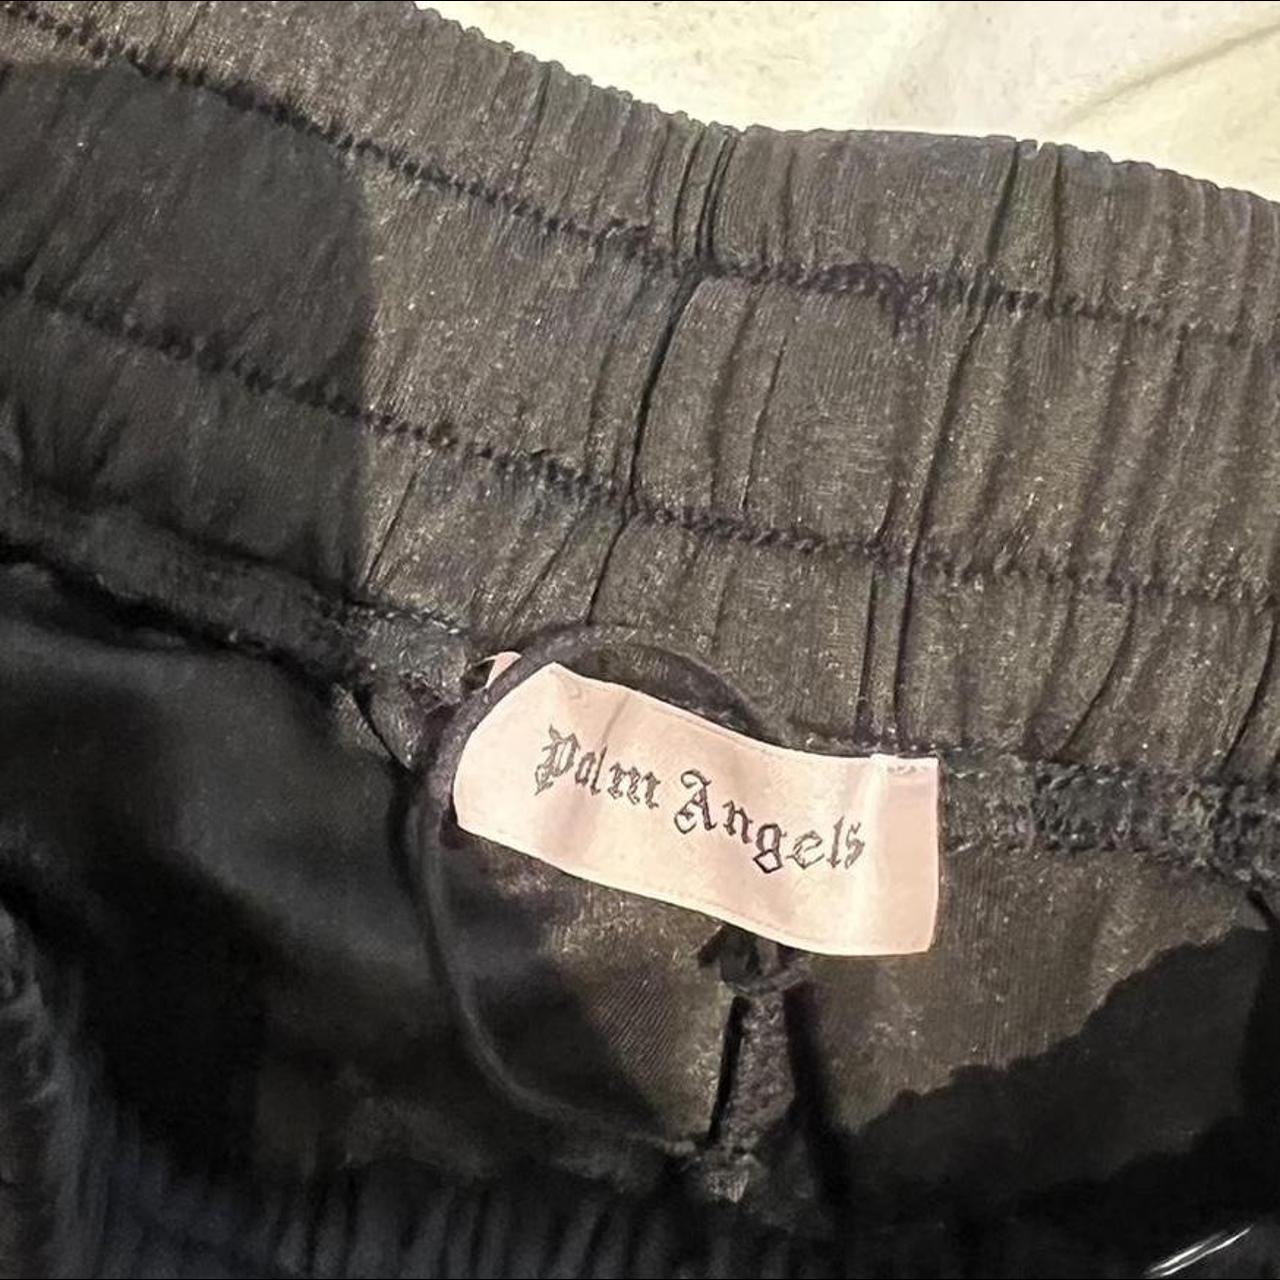 Product Image 3 - Palm Angels Black Shorts

Size M